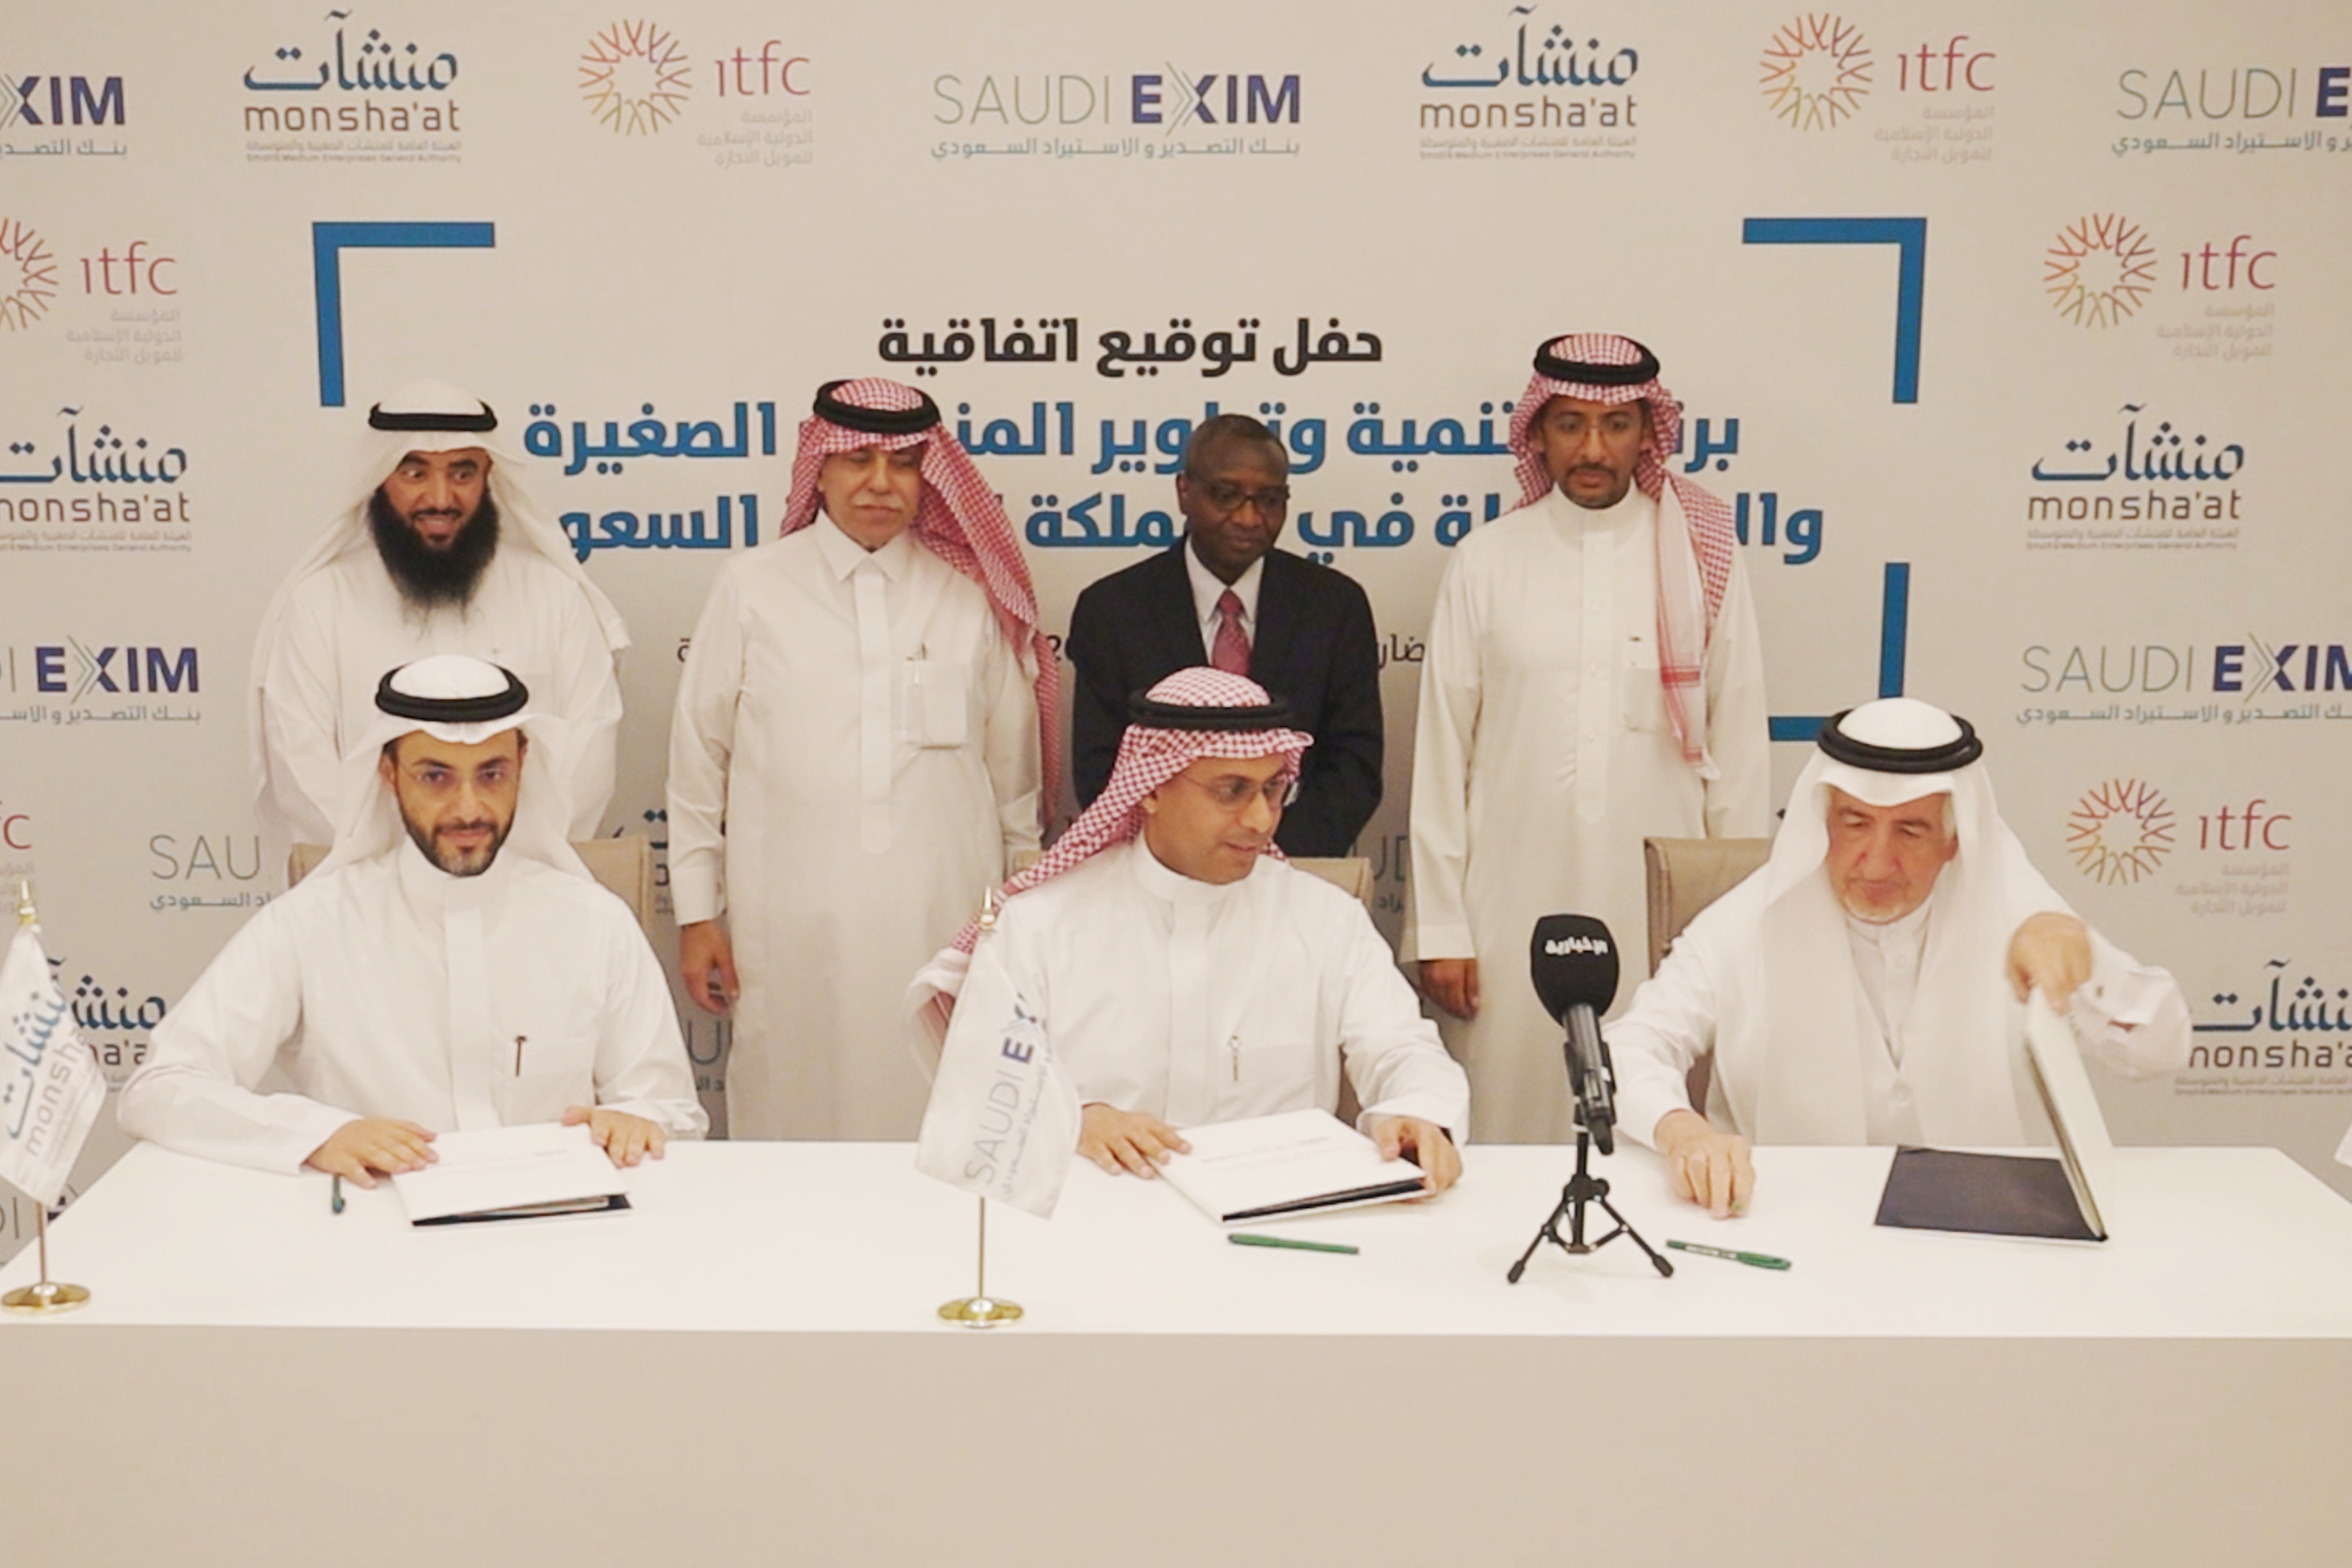 ITFC, Saudi EXIM, Monshaat to Begin Joint SME Growth Program